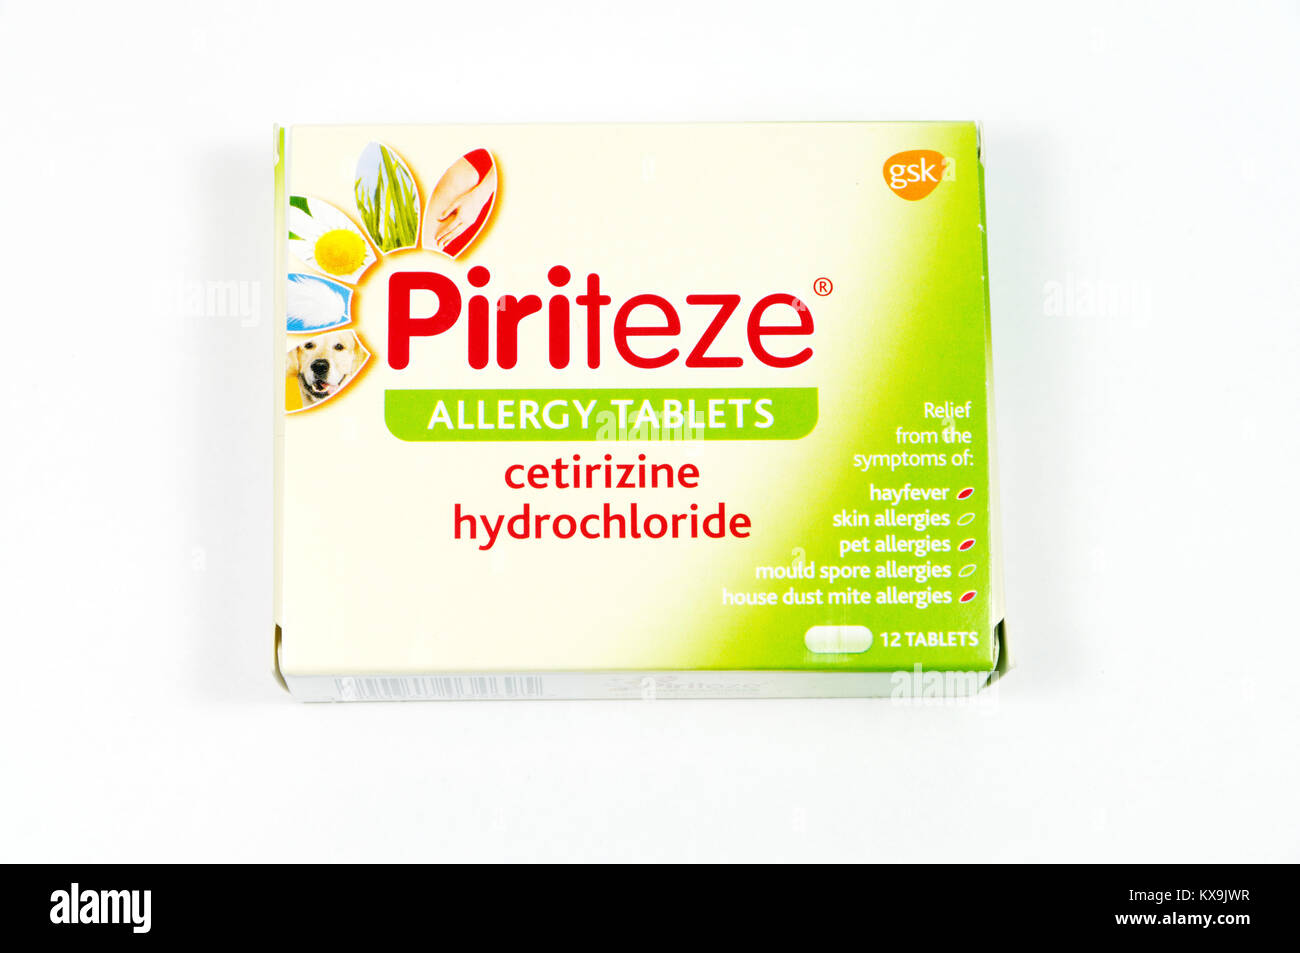 Piriteze Allergy Tablets. Stock Photo